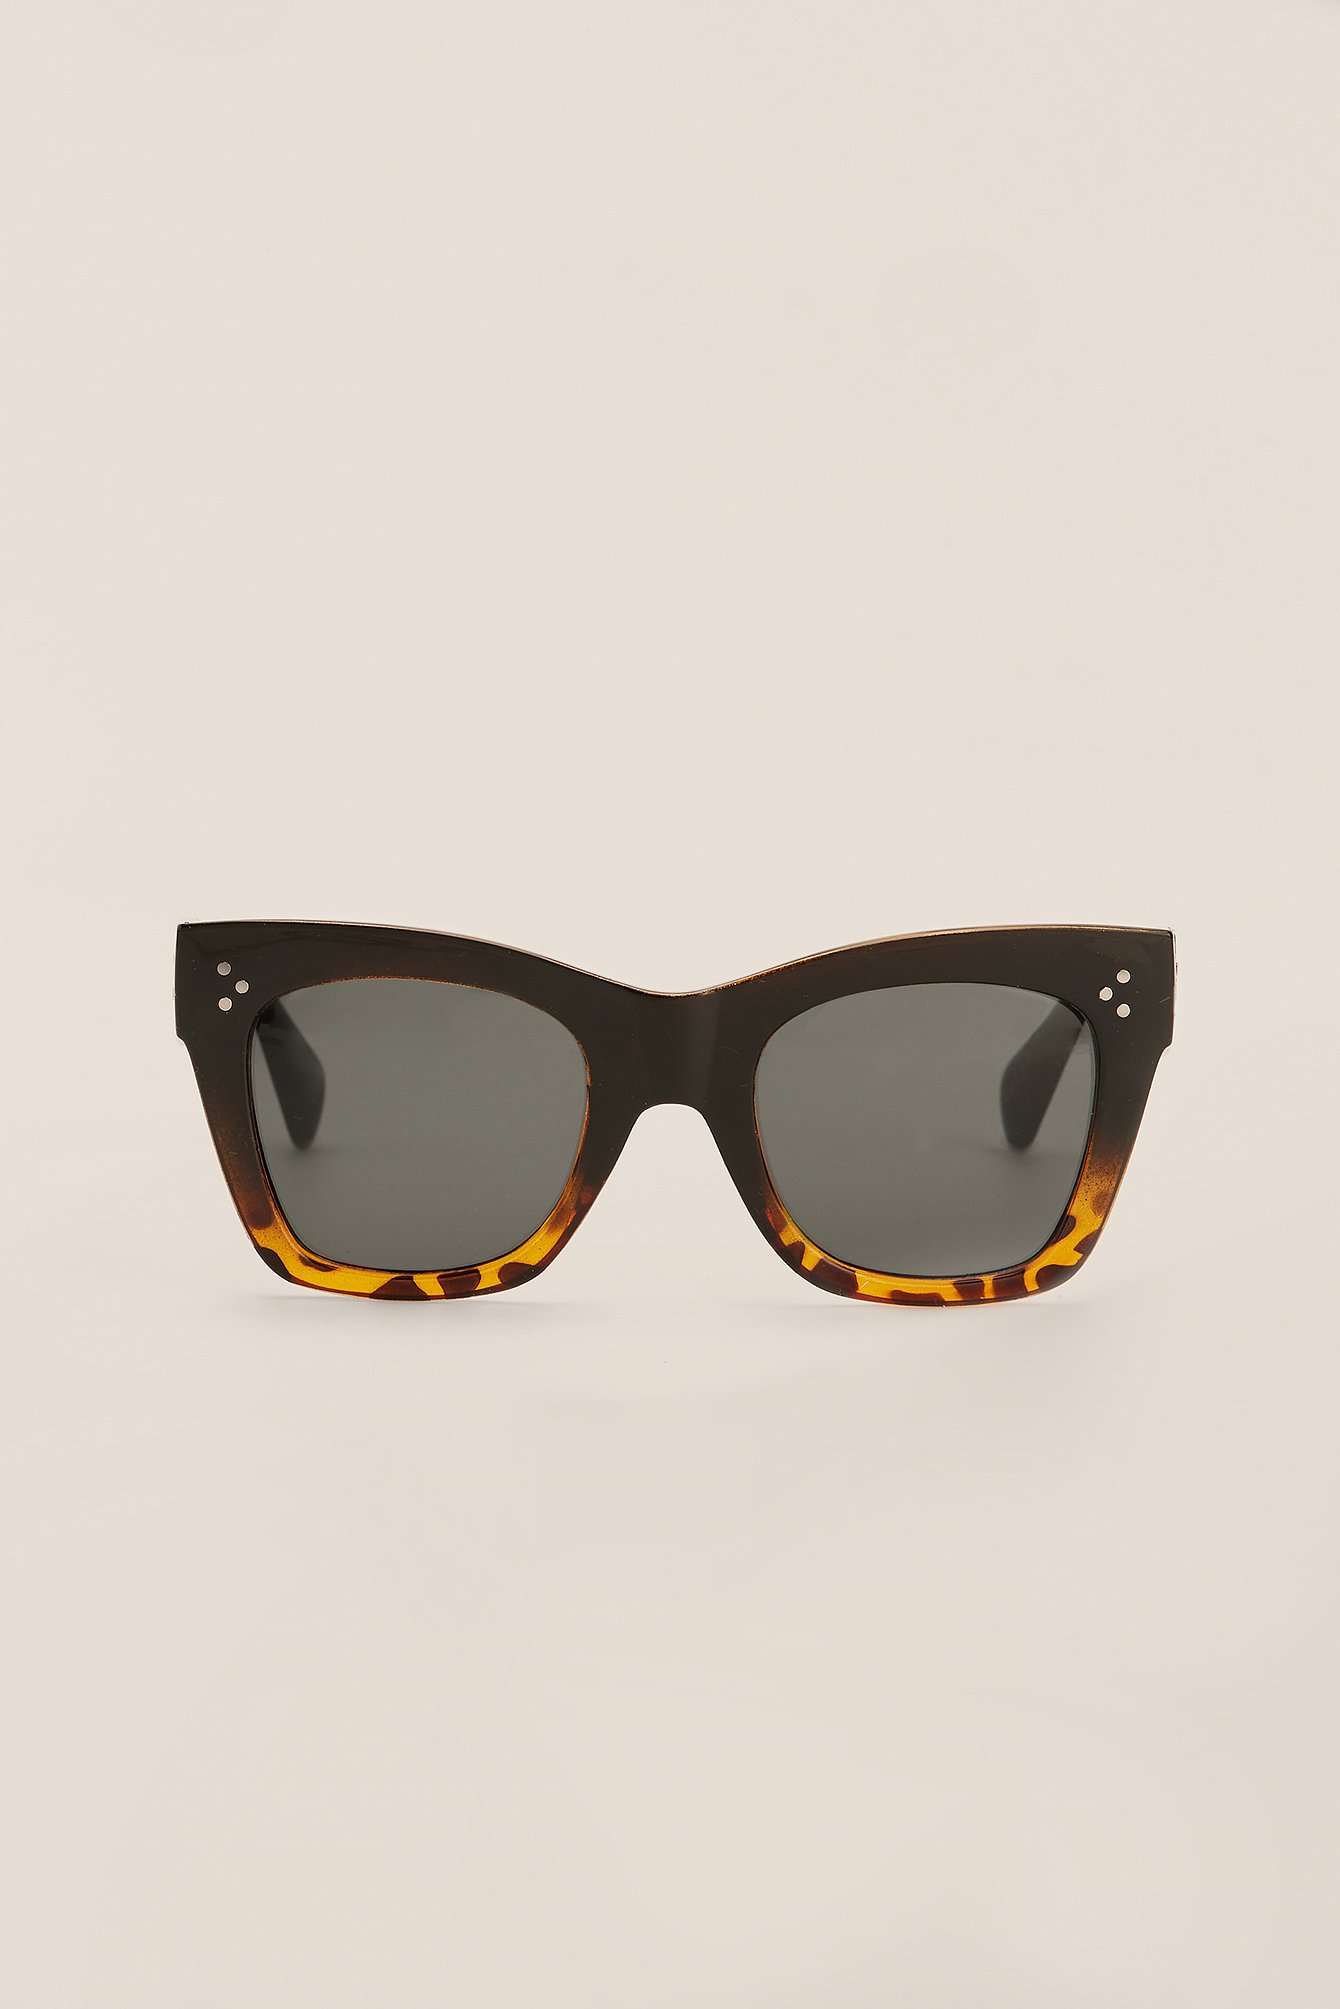 Black Two Toned Cateye Sunglasses